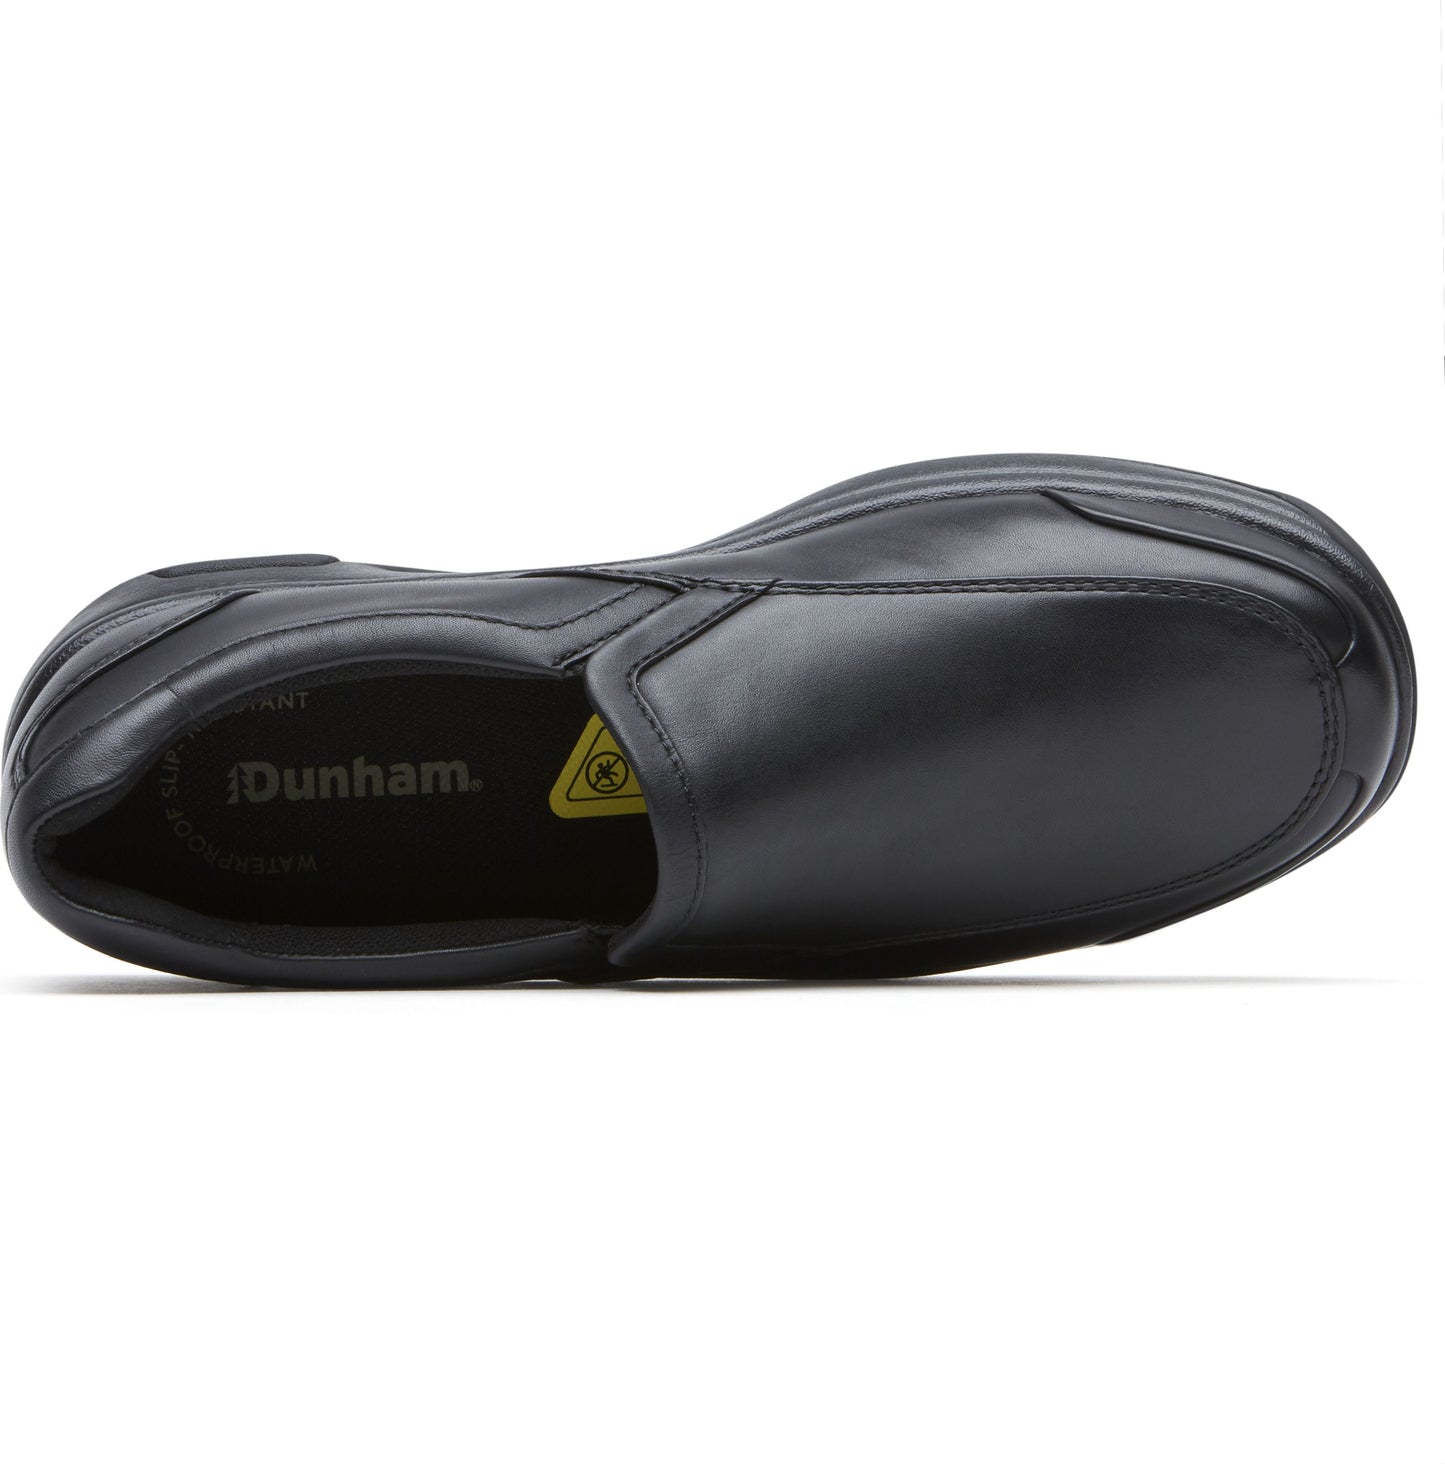 Dunhan Shoes 8000 Battery Park Service Slip-on Black - Narrow